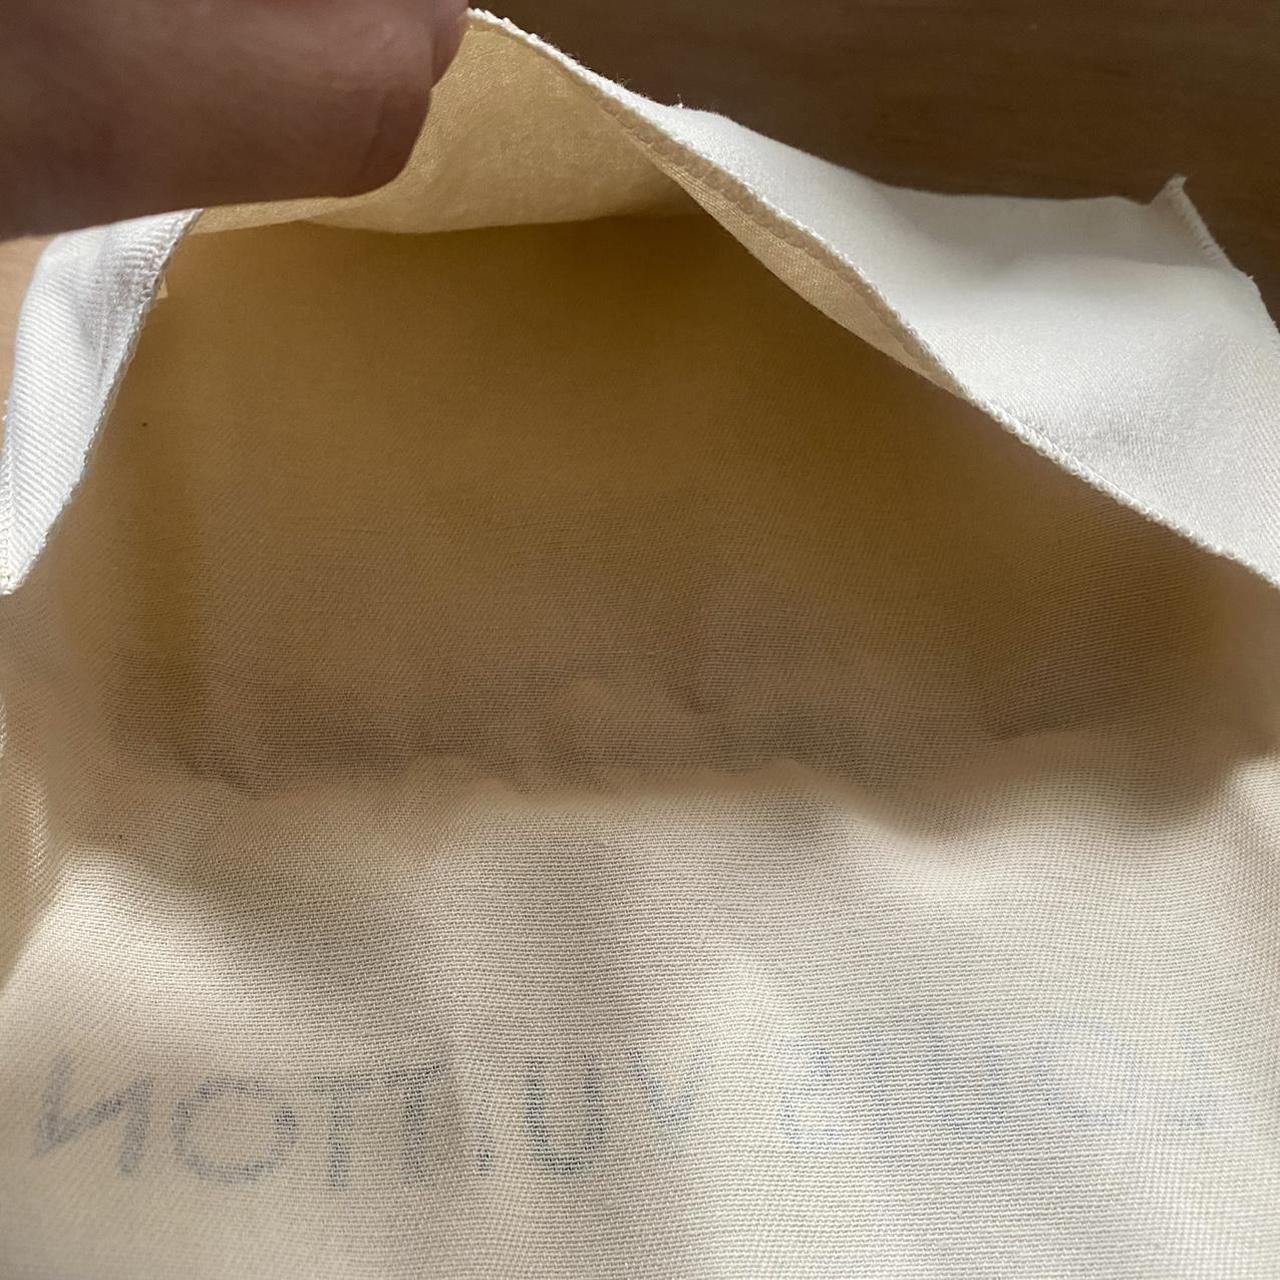 brea medium louis vuitton bag. receipt and dust bag - Depop